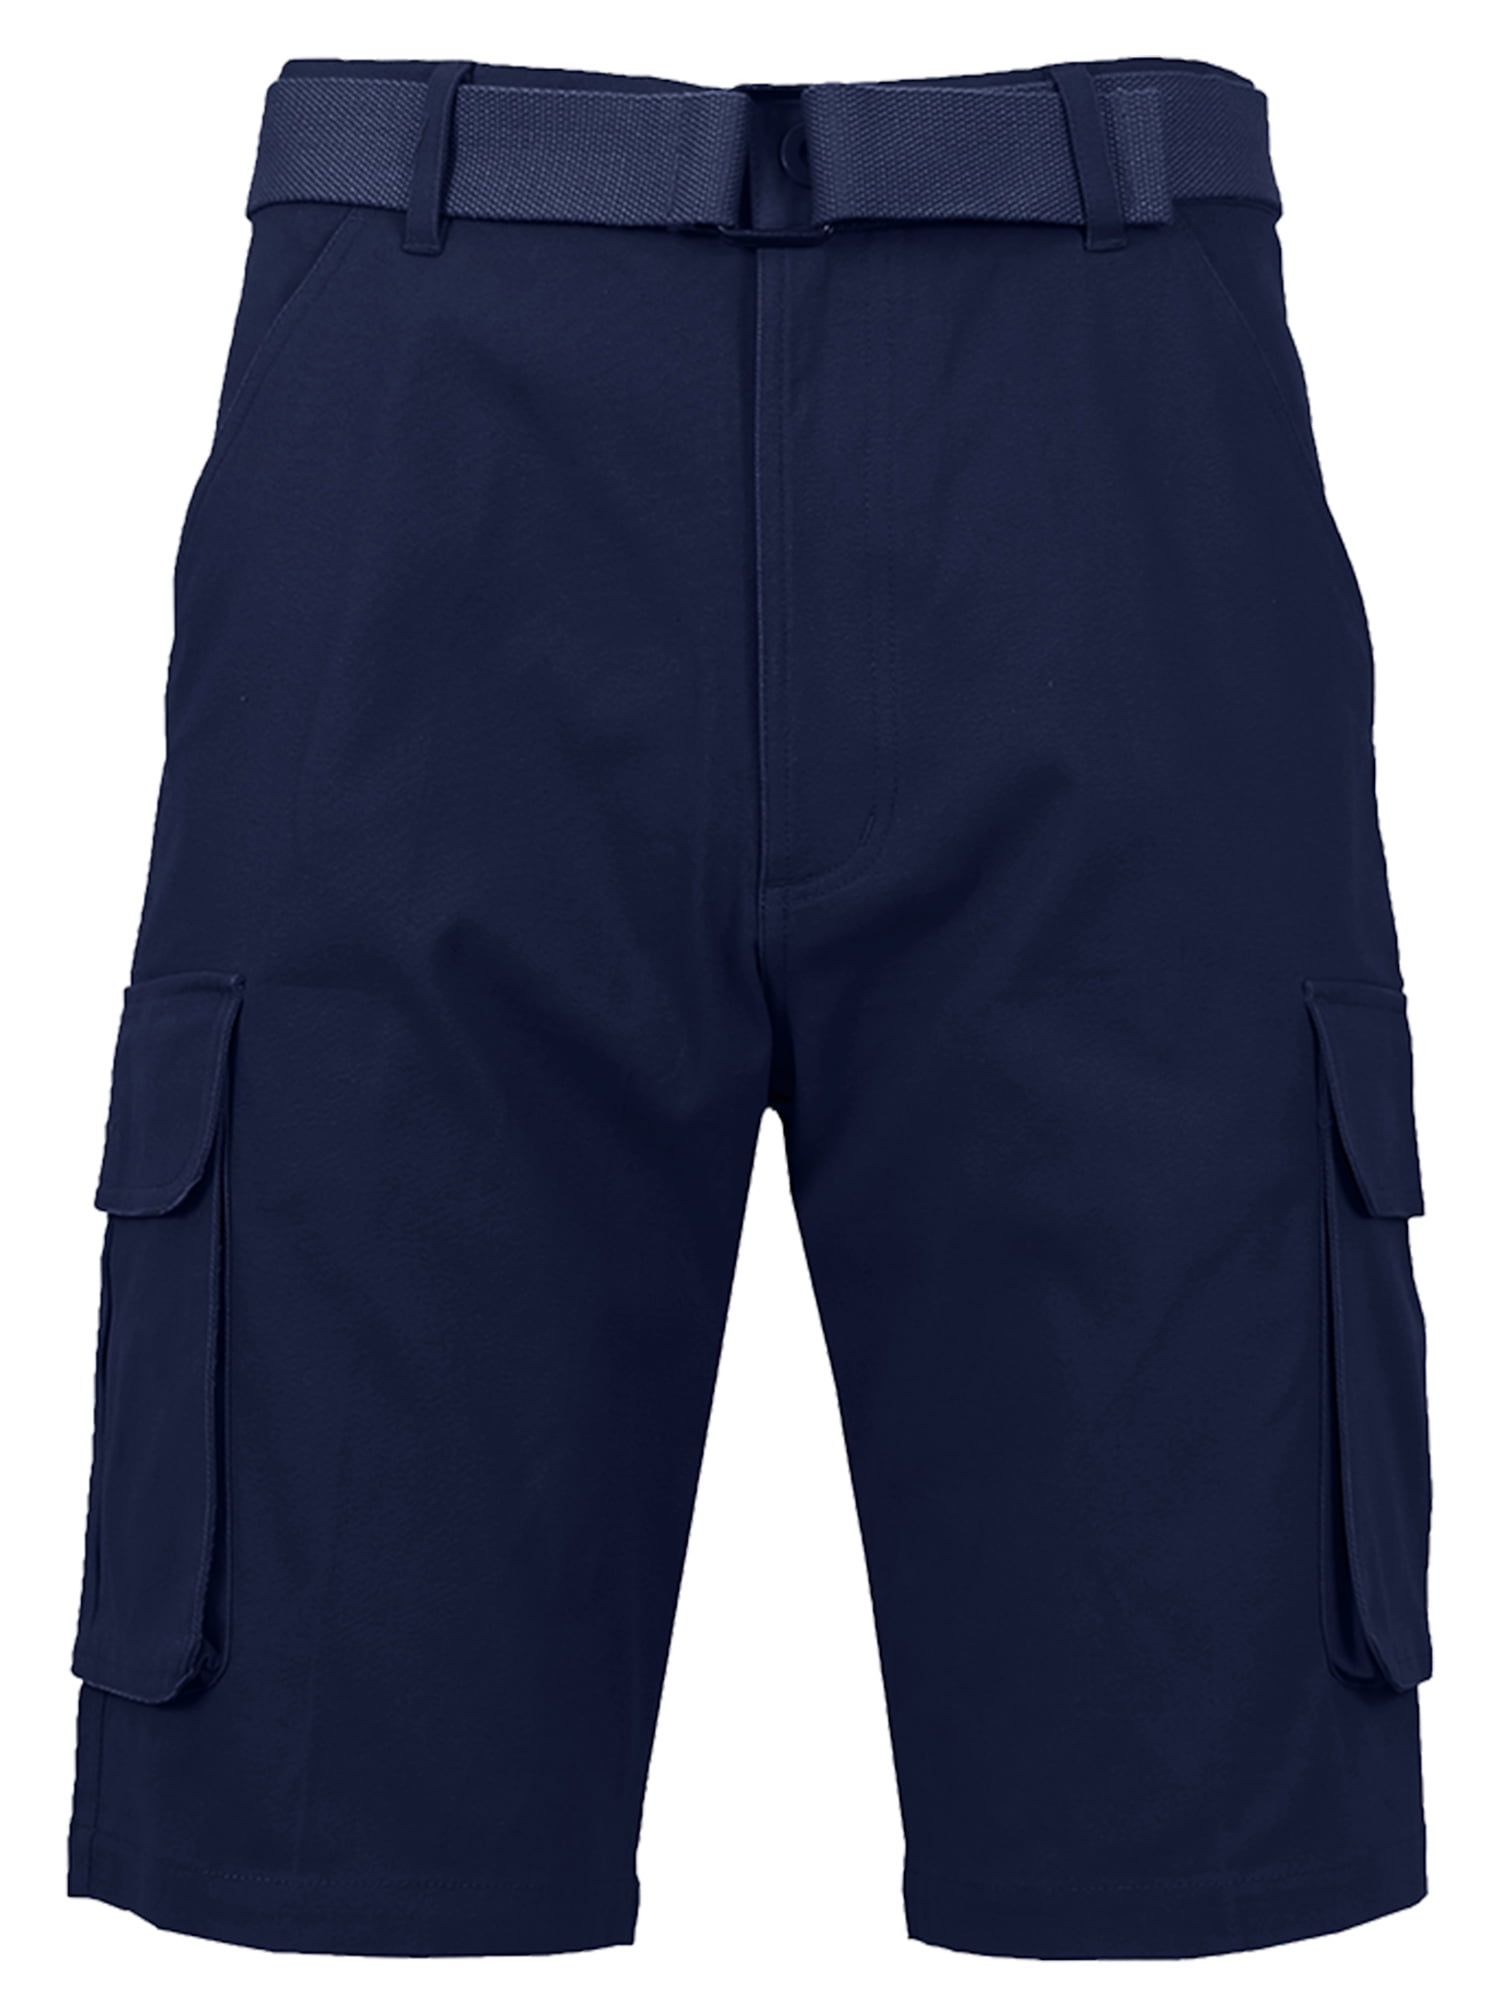 Men's Cotton Flex Stretch Cargo Shorts With Belt (Sizes, 30-42 